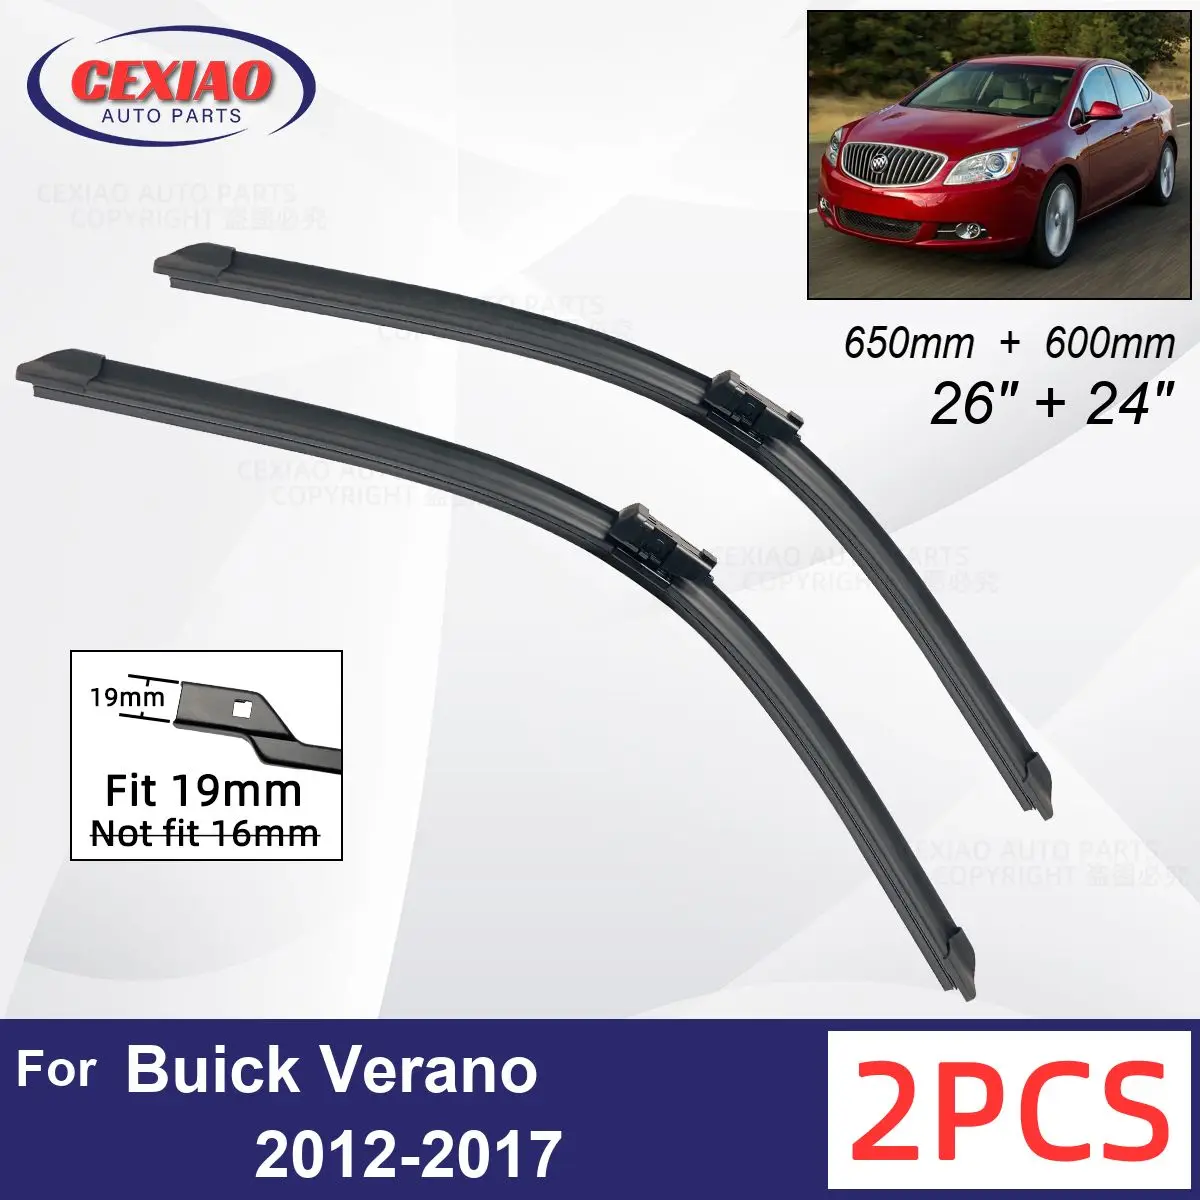 

Car Wiper For Buick Verano 2012-2017 Front Wiper Blades Soft Rubber Windscreen Wipers Auto Windshield 26"+24" 650mm + 600mm